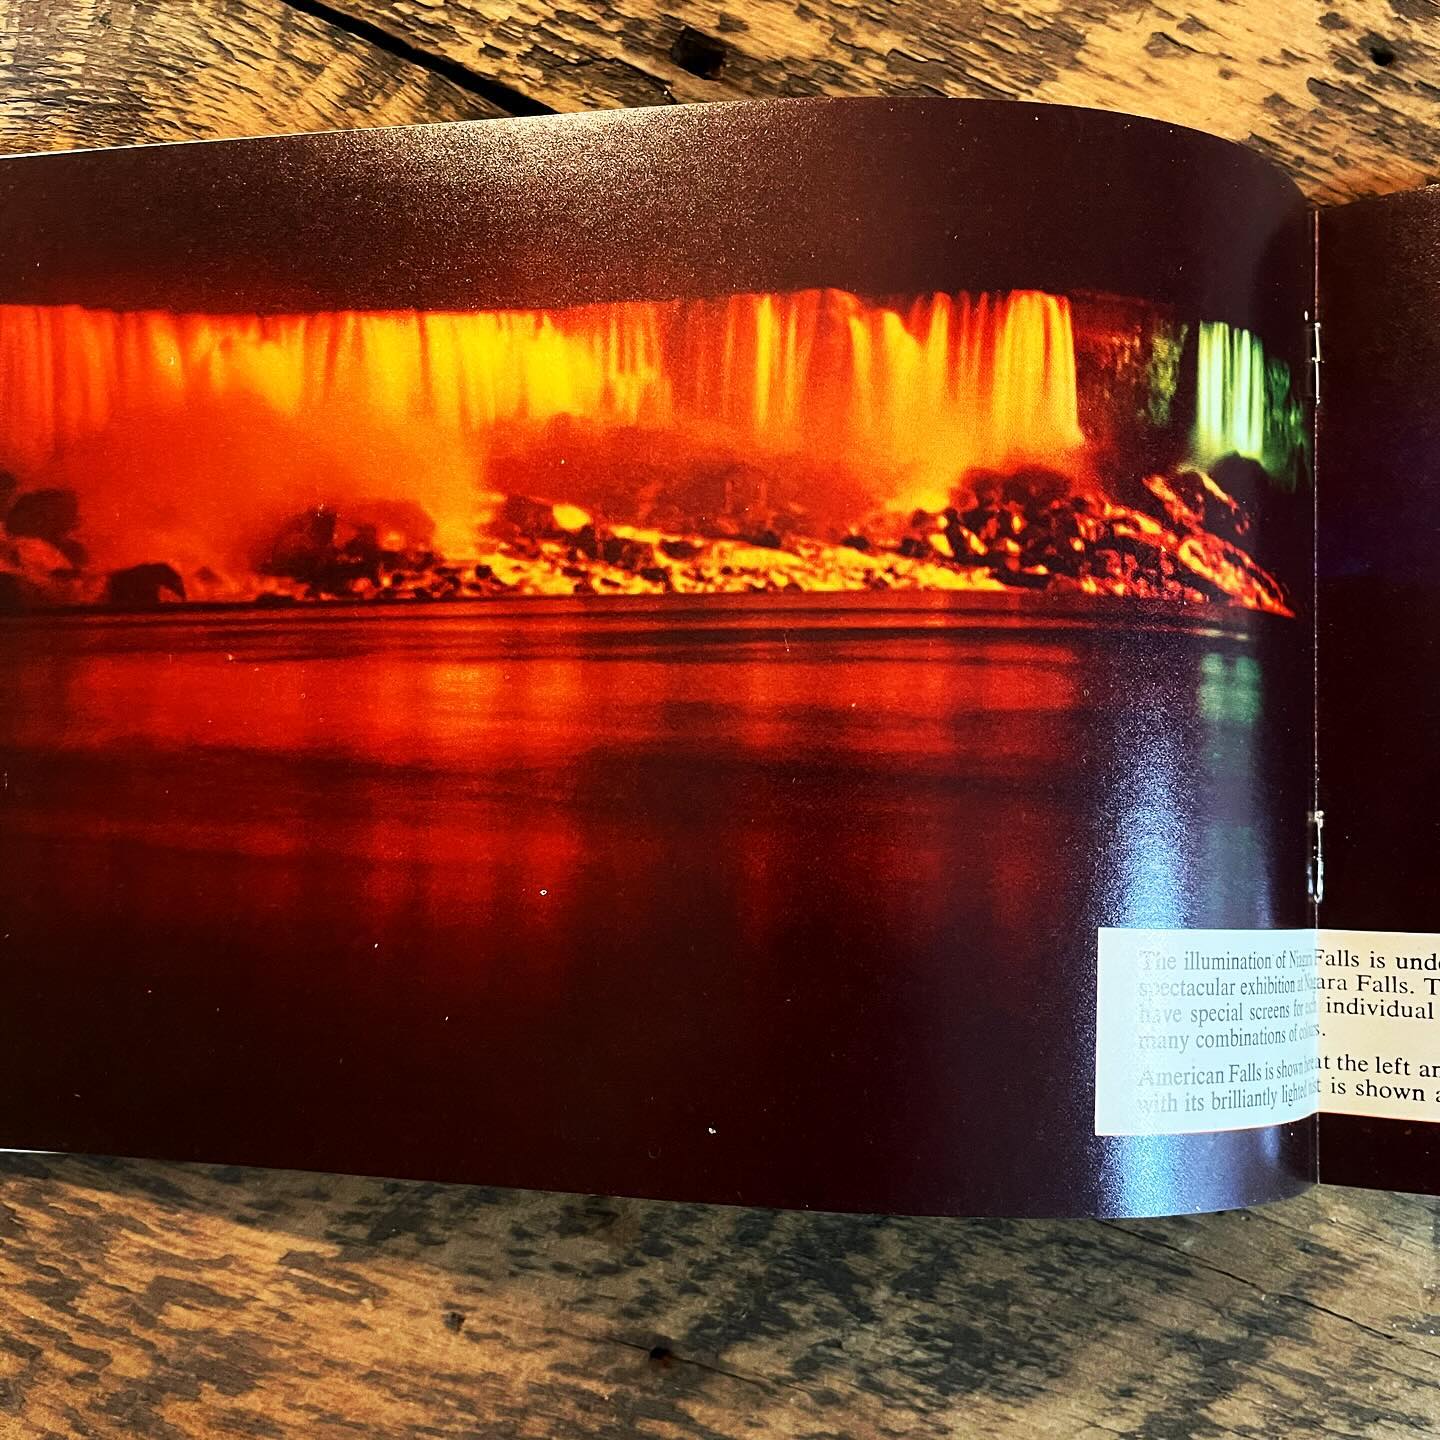 Vintage Awesome Niagara Falls tourist booklet (c1955).